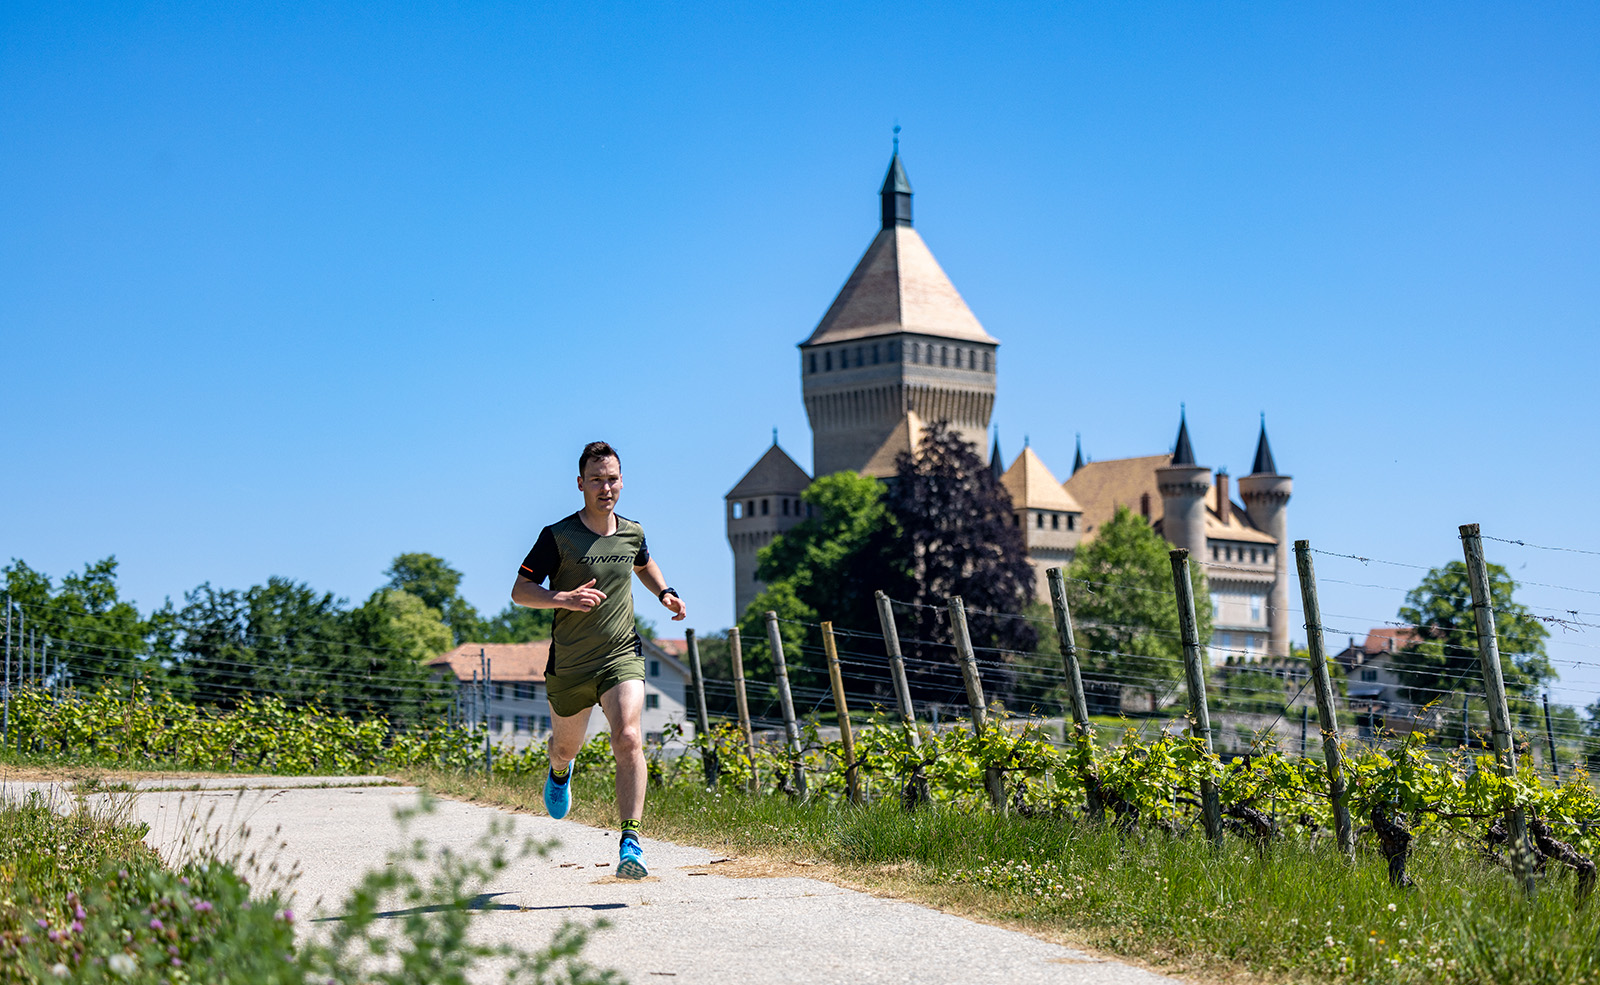 Course à pied - Trail running - Magasin François Sports - Morges - Lausanne